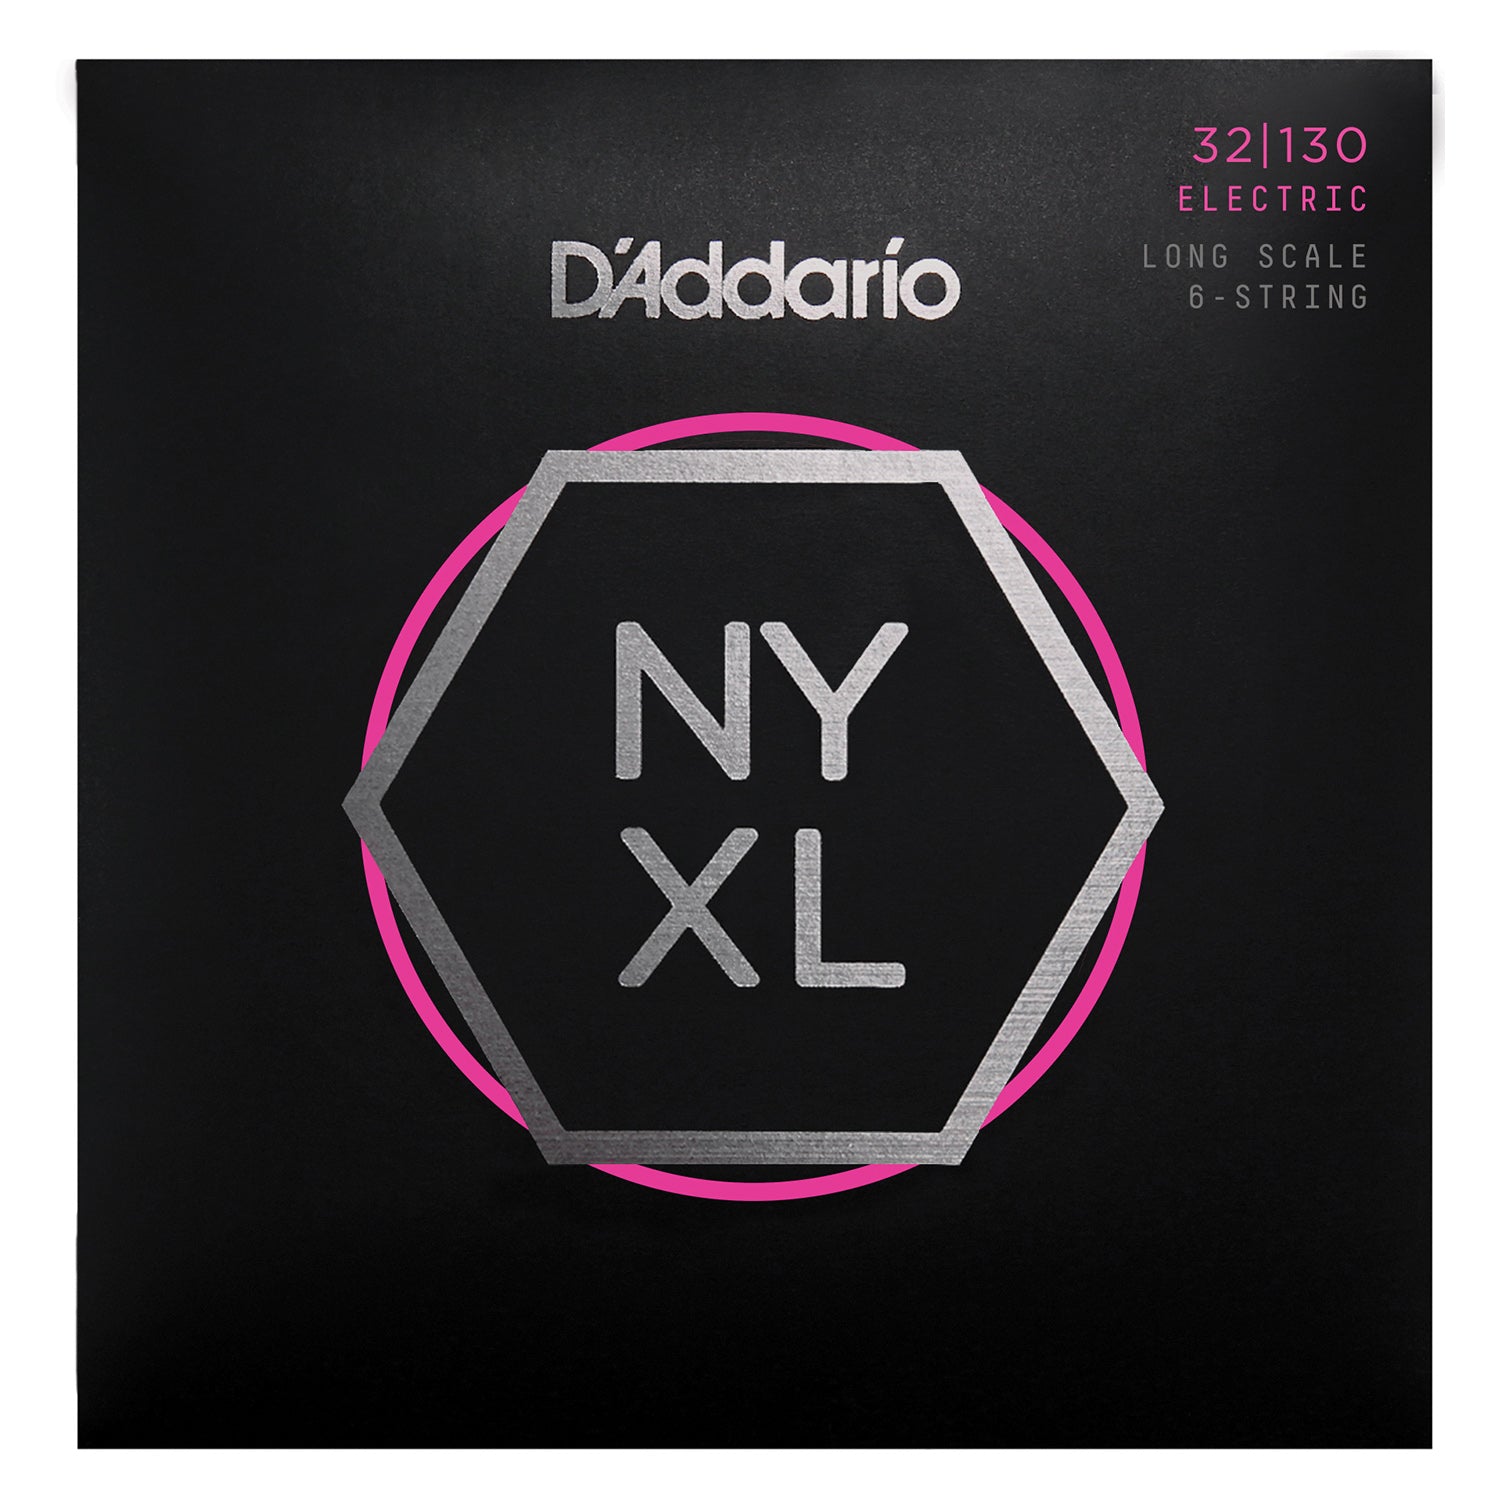 D'Addario NYXL32130 Nickel Wound Bass Guitar Strings, Regular Light 6-String, 32-130, Long Scale